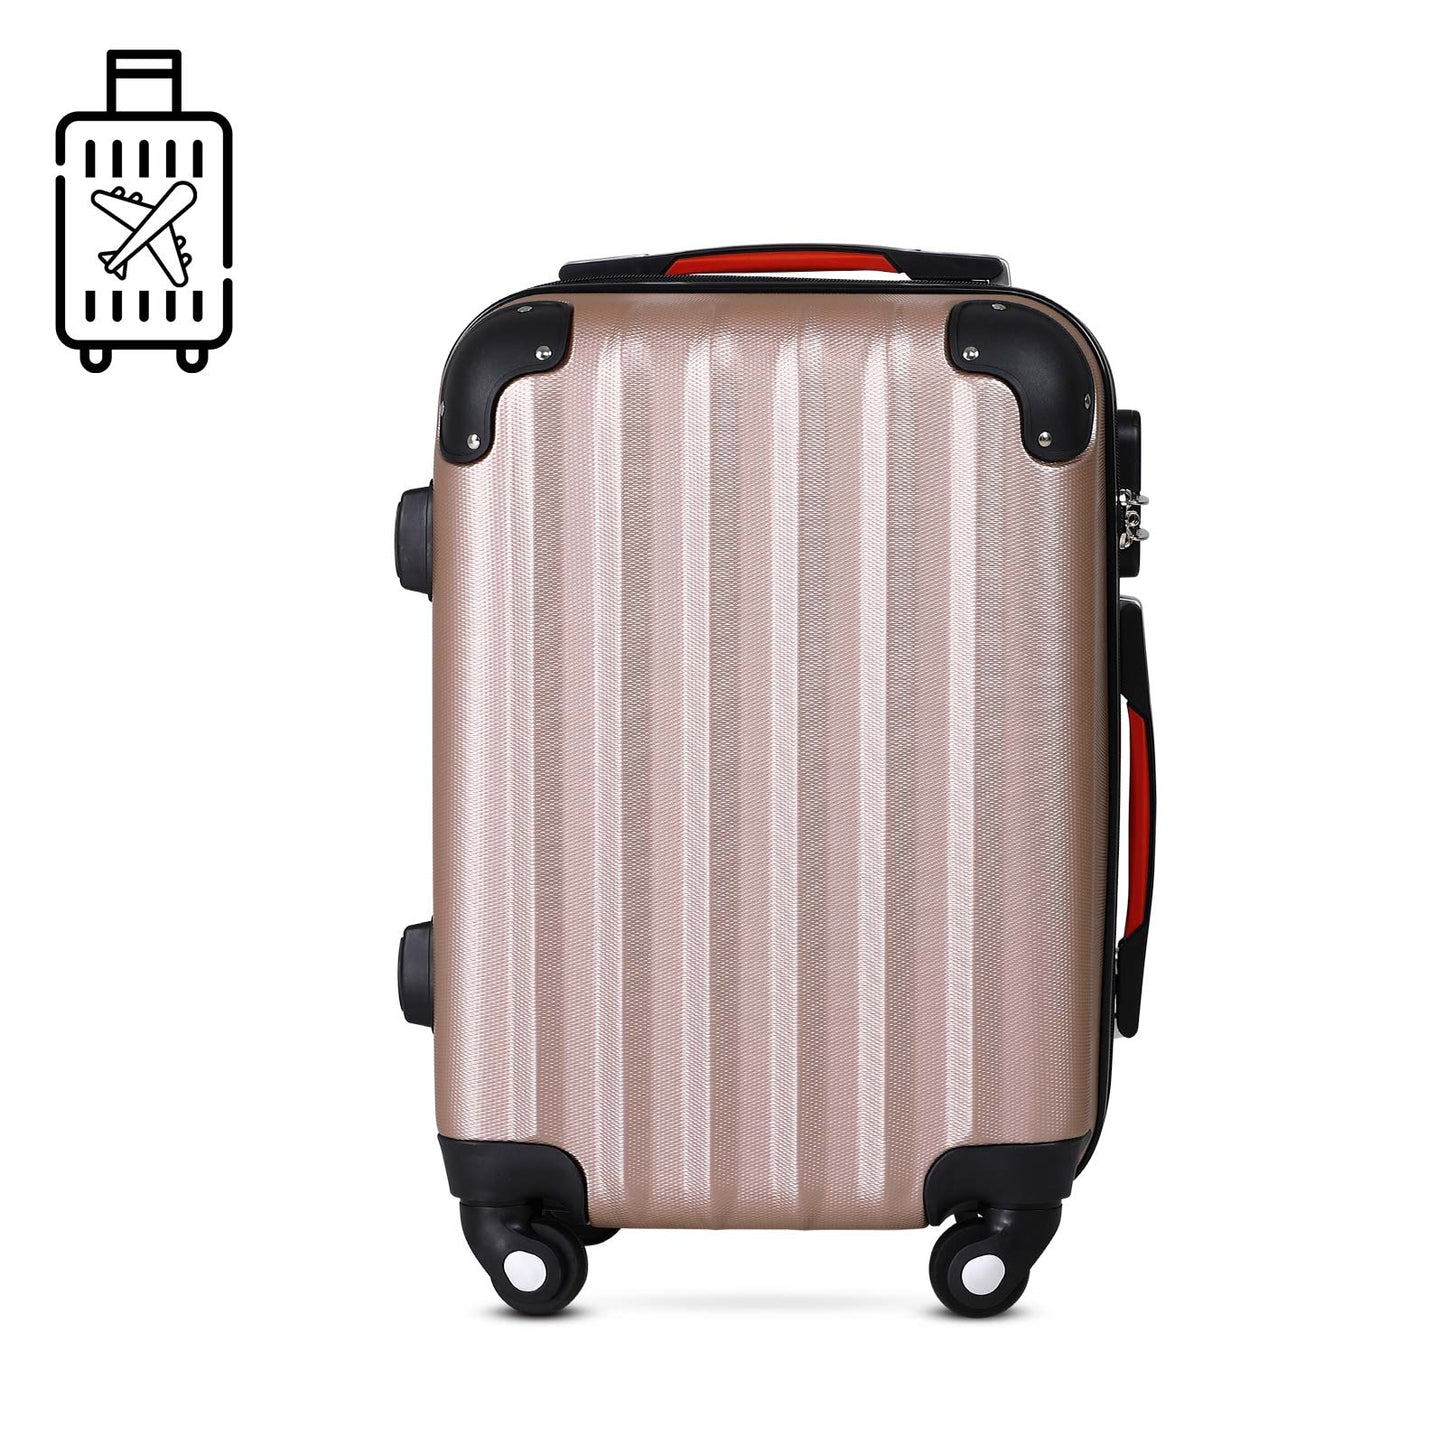 Nancy's West Concord Travel Suitcase Set - 4-piece - Hardcase - Extra Straps - Practical Mesh Pocket - ABS